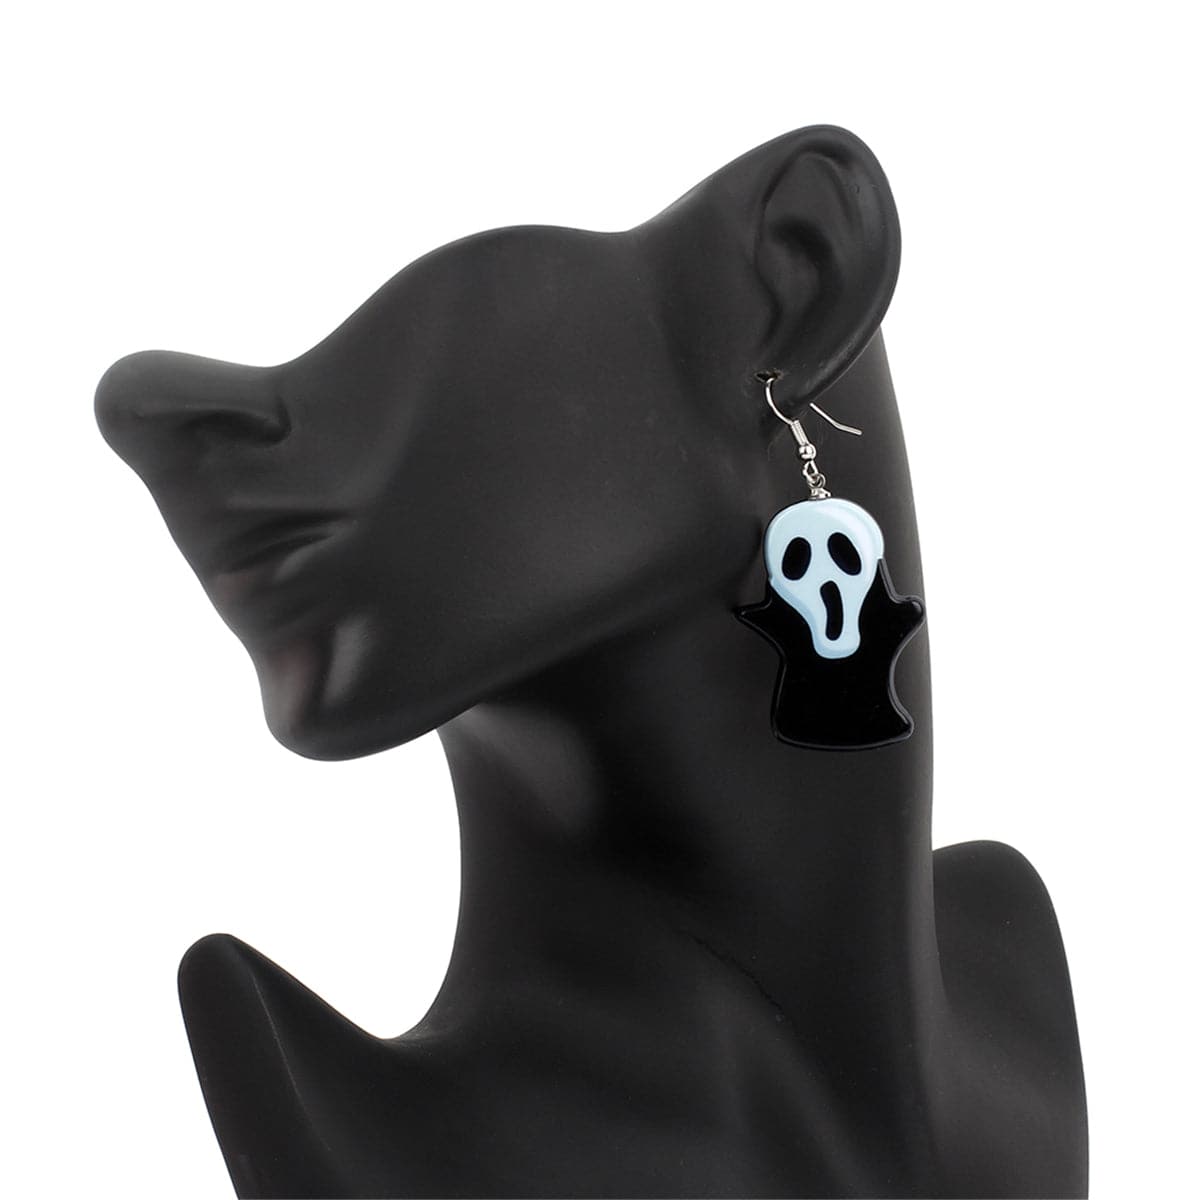 Black Acrylic & Silver-Plated Ghost Drop Earrings